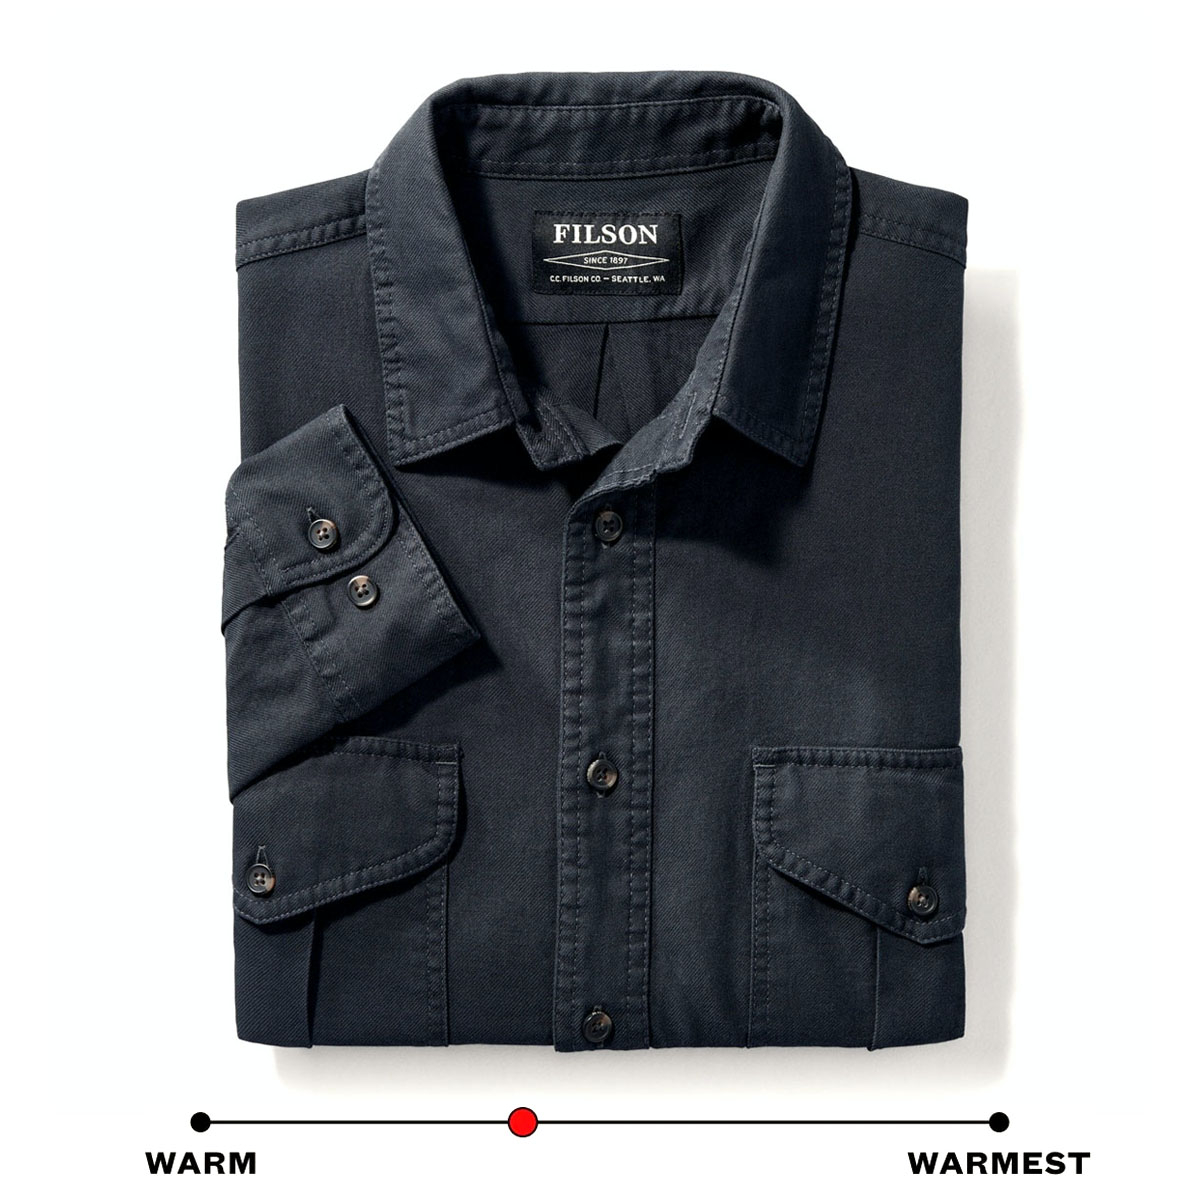 Filson Lightweight Alaskan Guide Shirt Midnight Navy, setting the standard for year-round versatility and comfort in an outdoor shirt